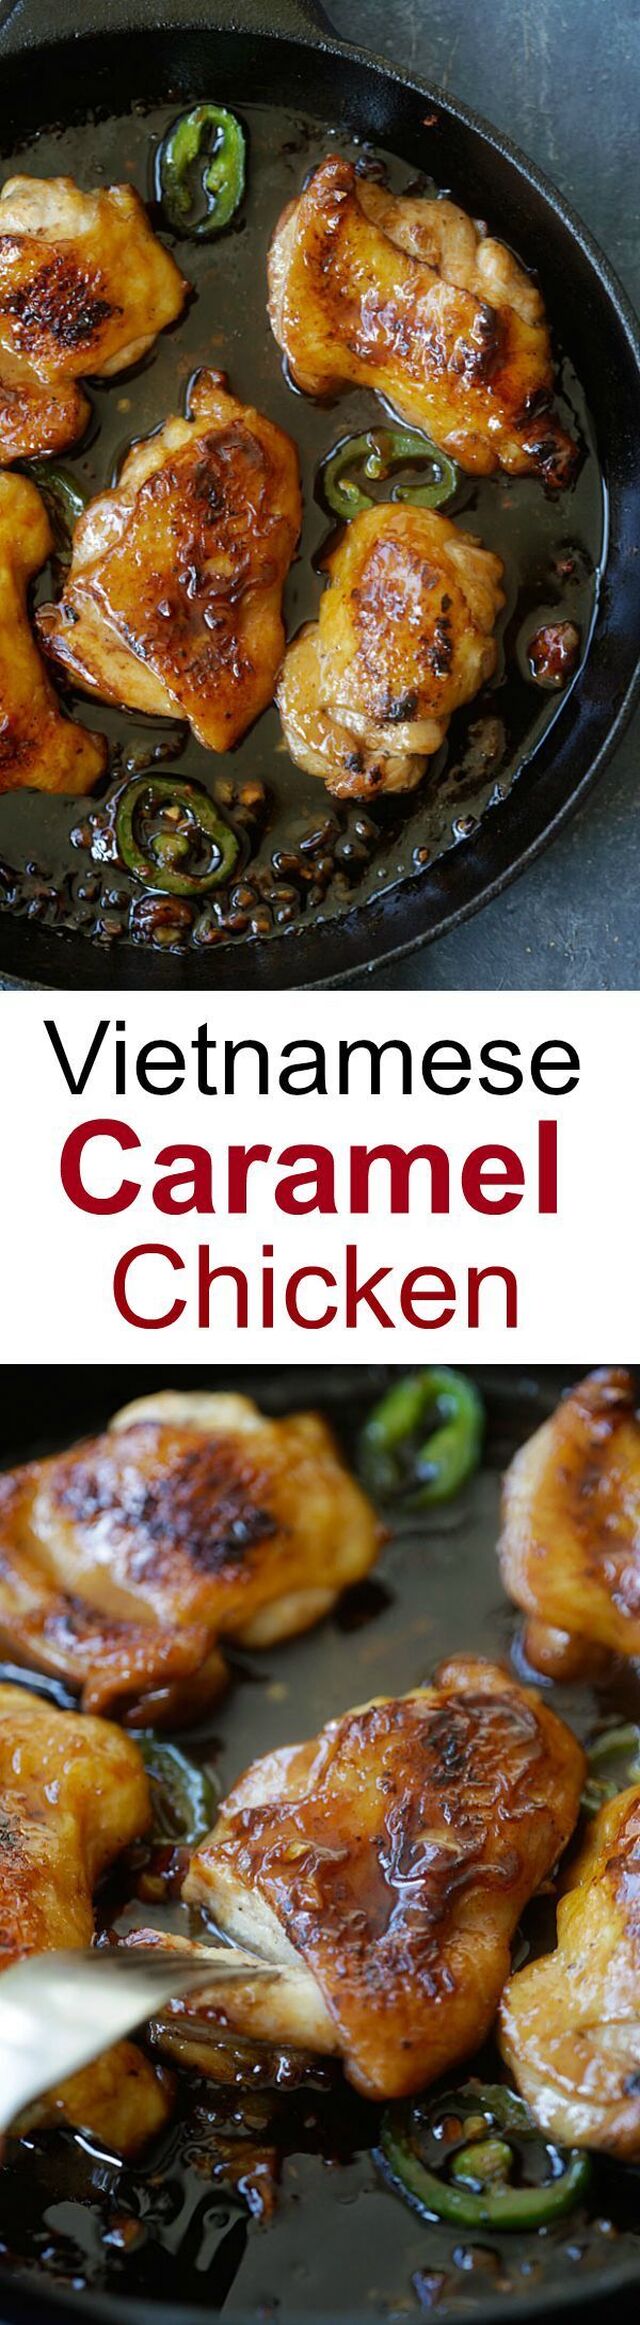 Vietnamese Caramel Chicken | Easy Delicious Recipes: Rasa Malaysia | Chicken recipes, Chicken dishes, Caramel chicken